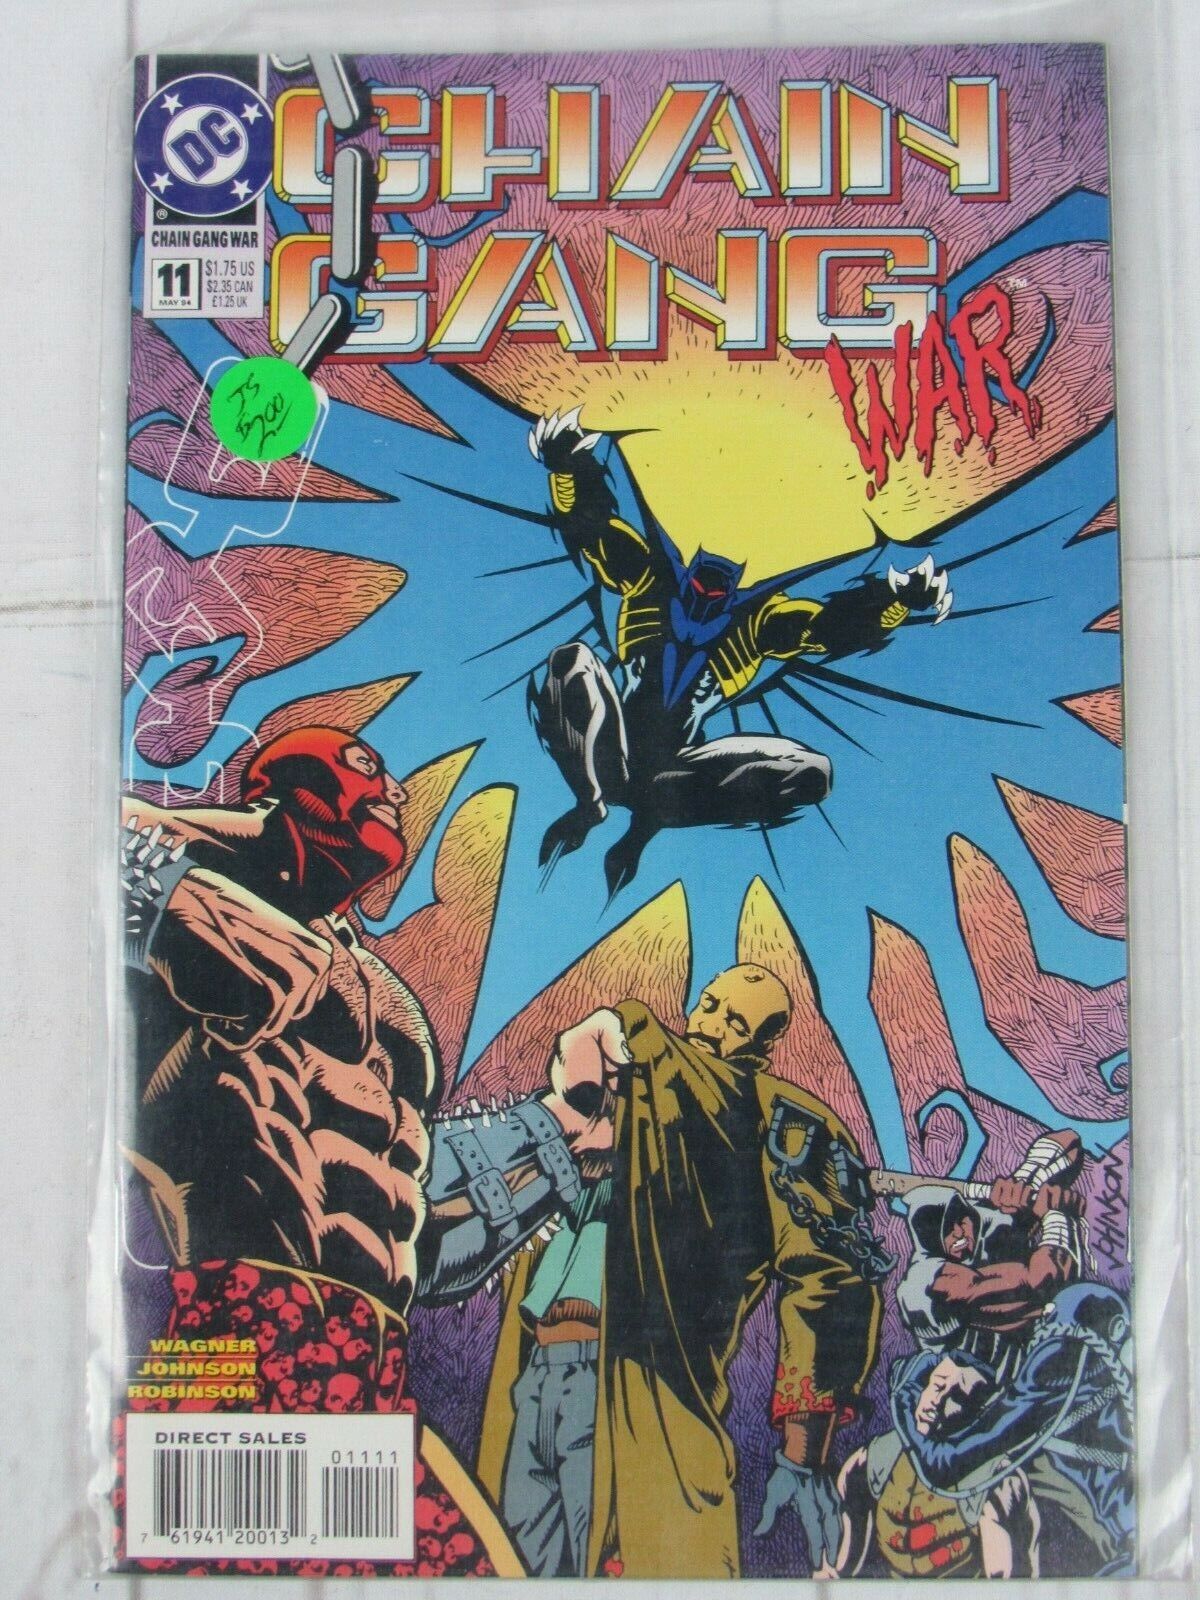 Chain Gang War #11 May 1994 DC Comics 